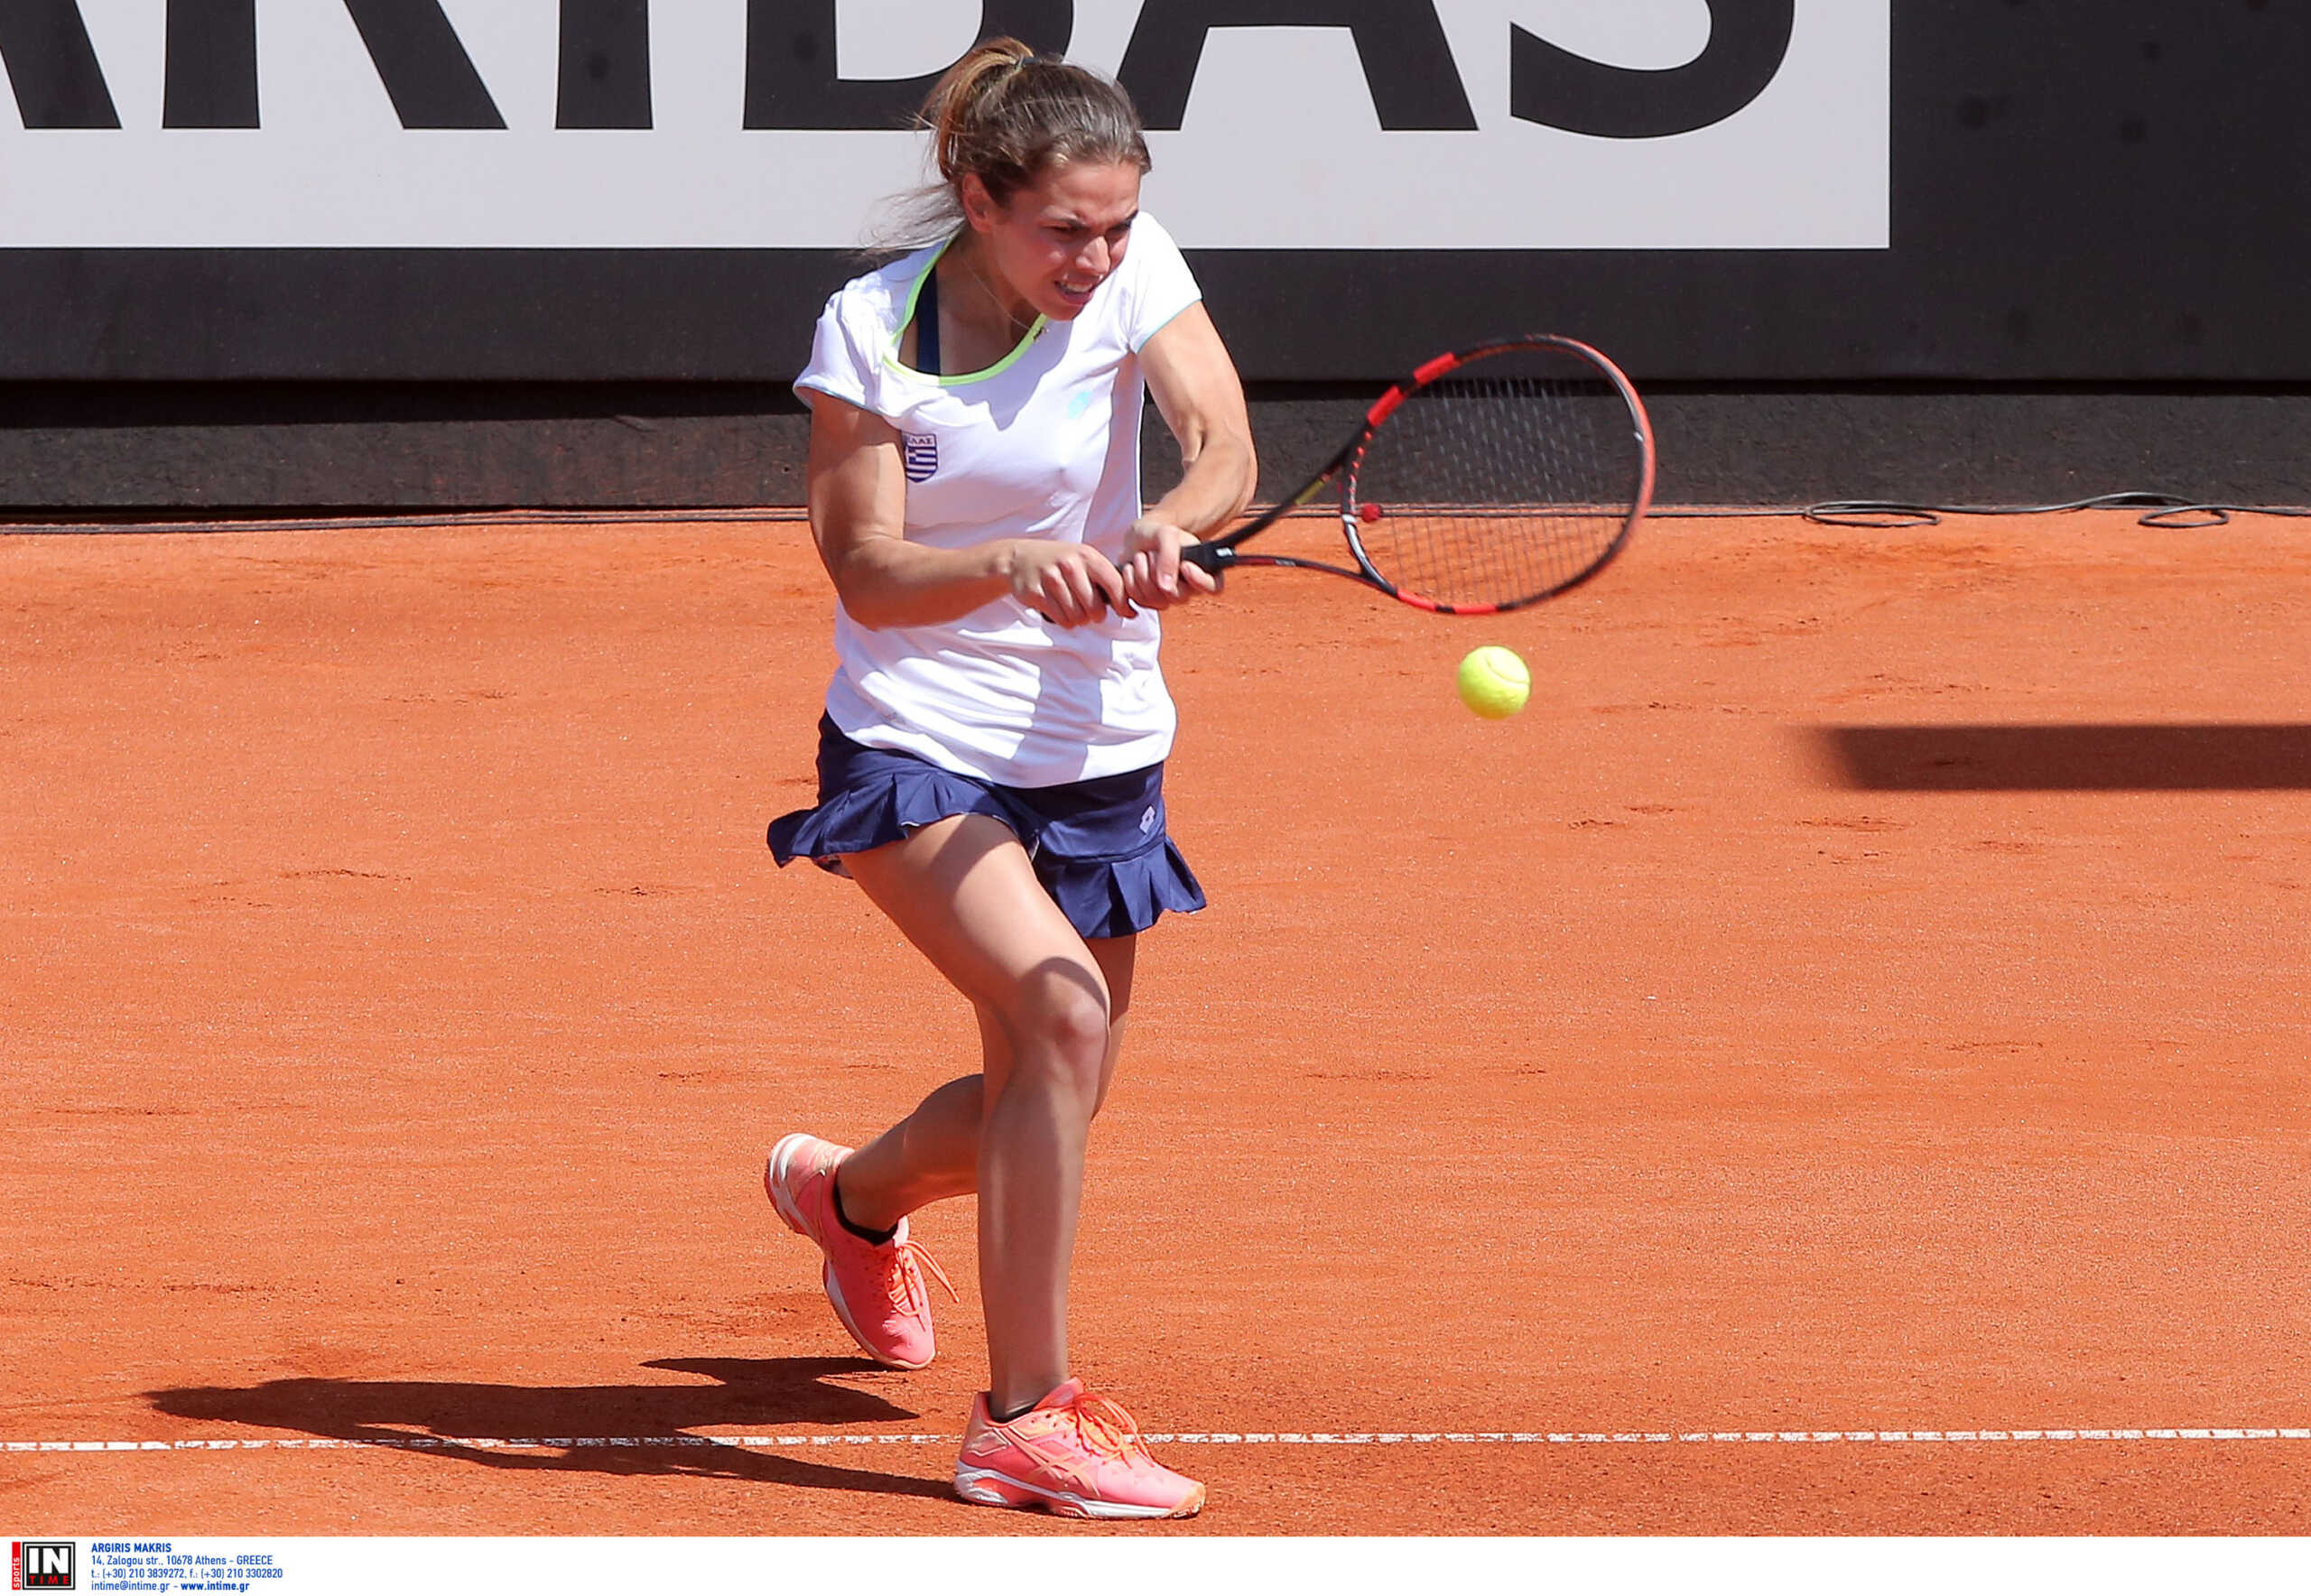 Roland Garros: Ιστορική πρόκριση για Βαλεντίνη Γραμματικοπούλου και ντεμπούτο με Σαβίλε